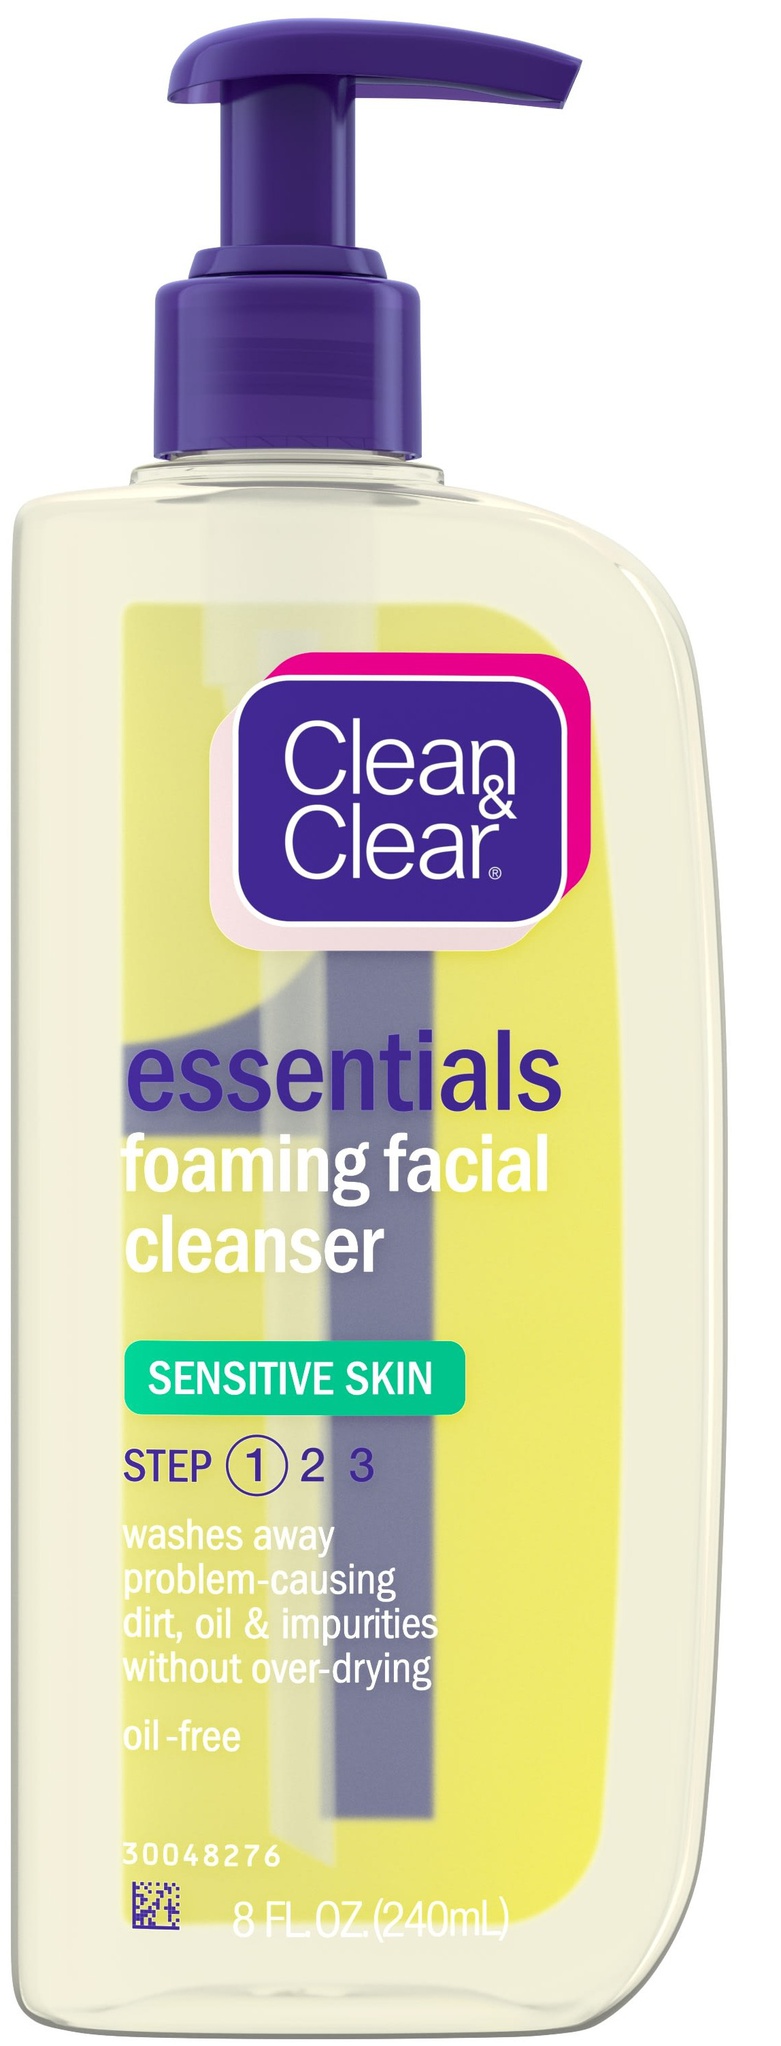 Clean & Clear Foaming Facial Cleanser Sensitive Skin